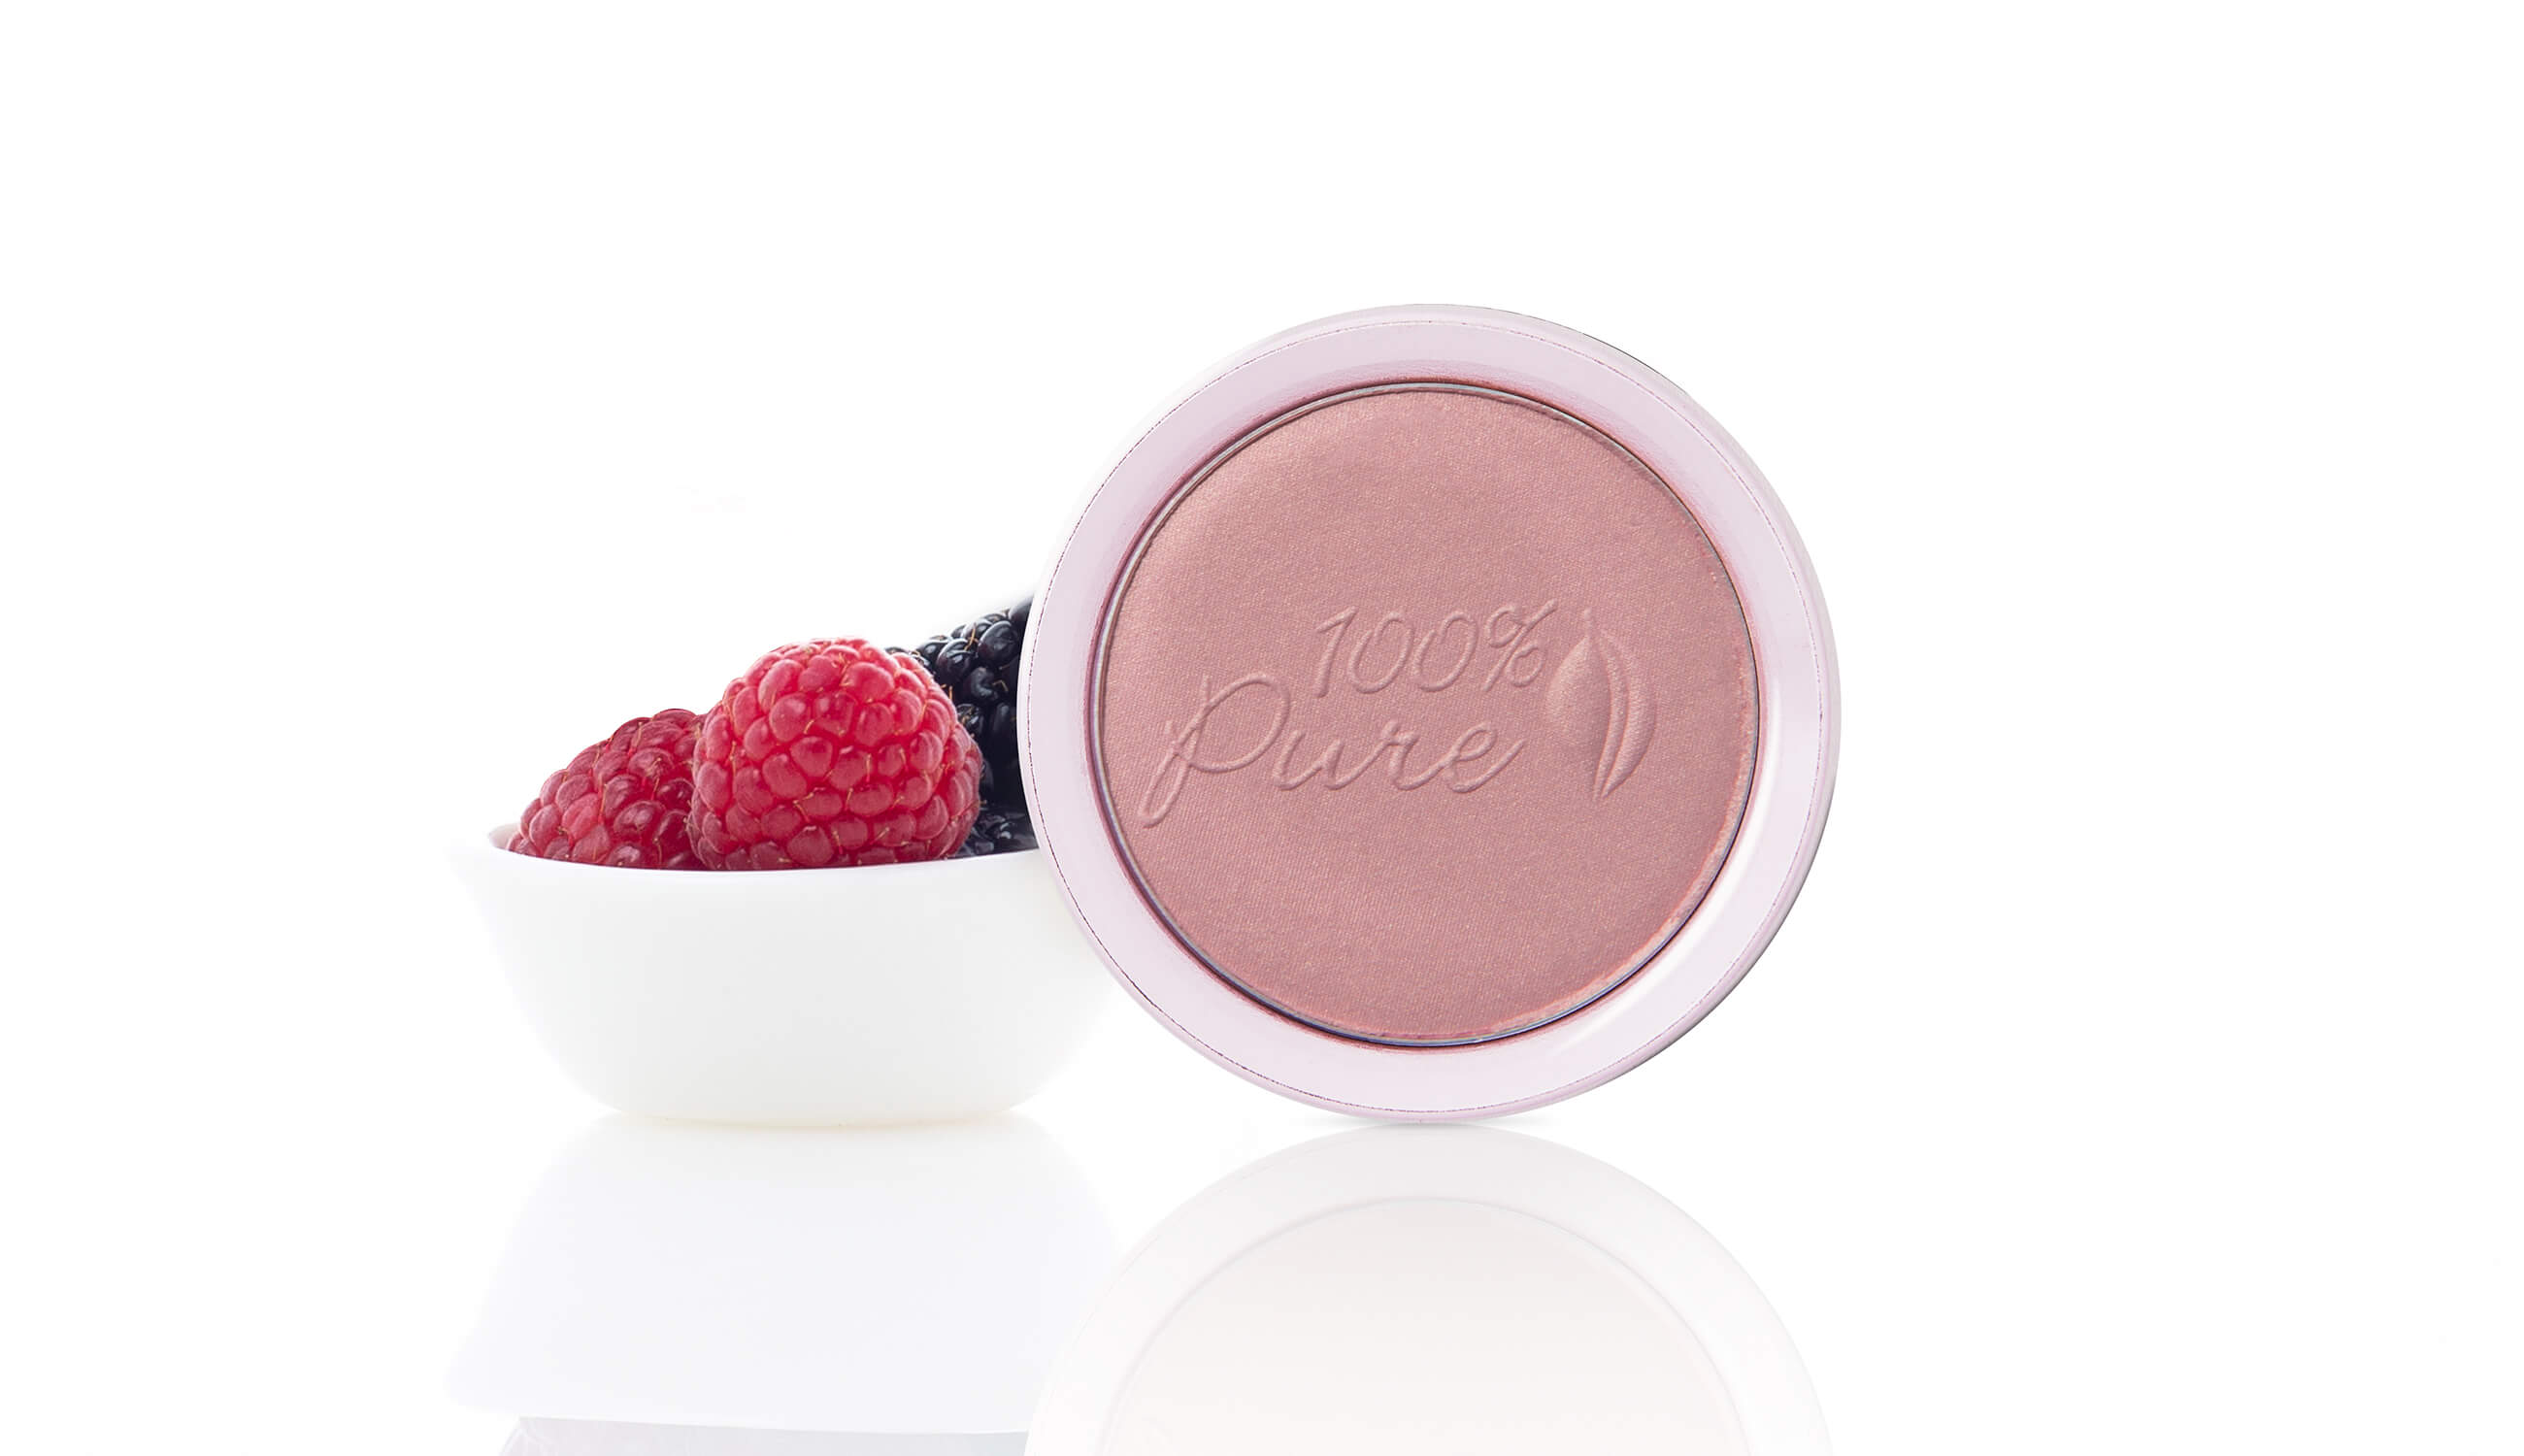 FP blush with raspberries.jpg